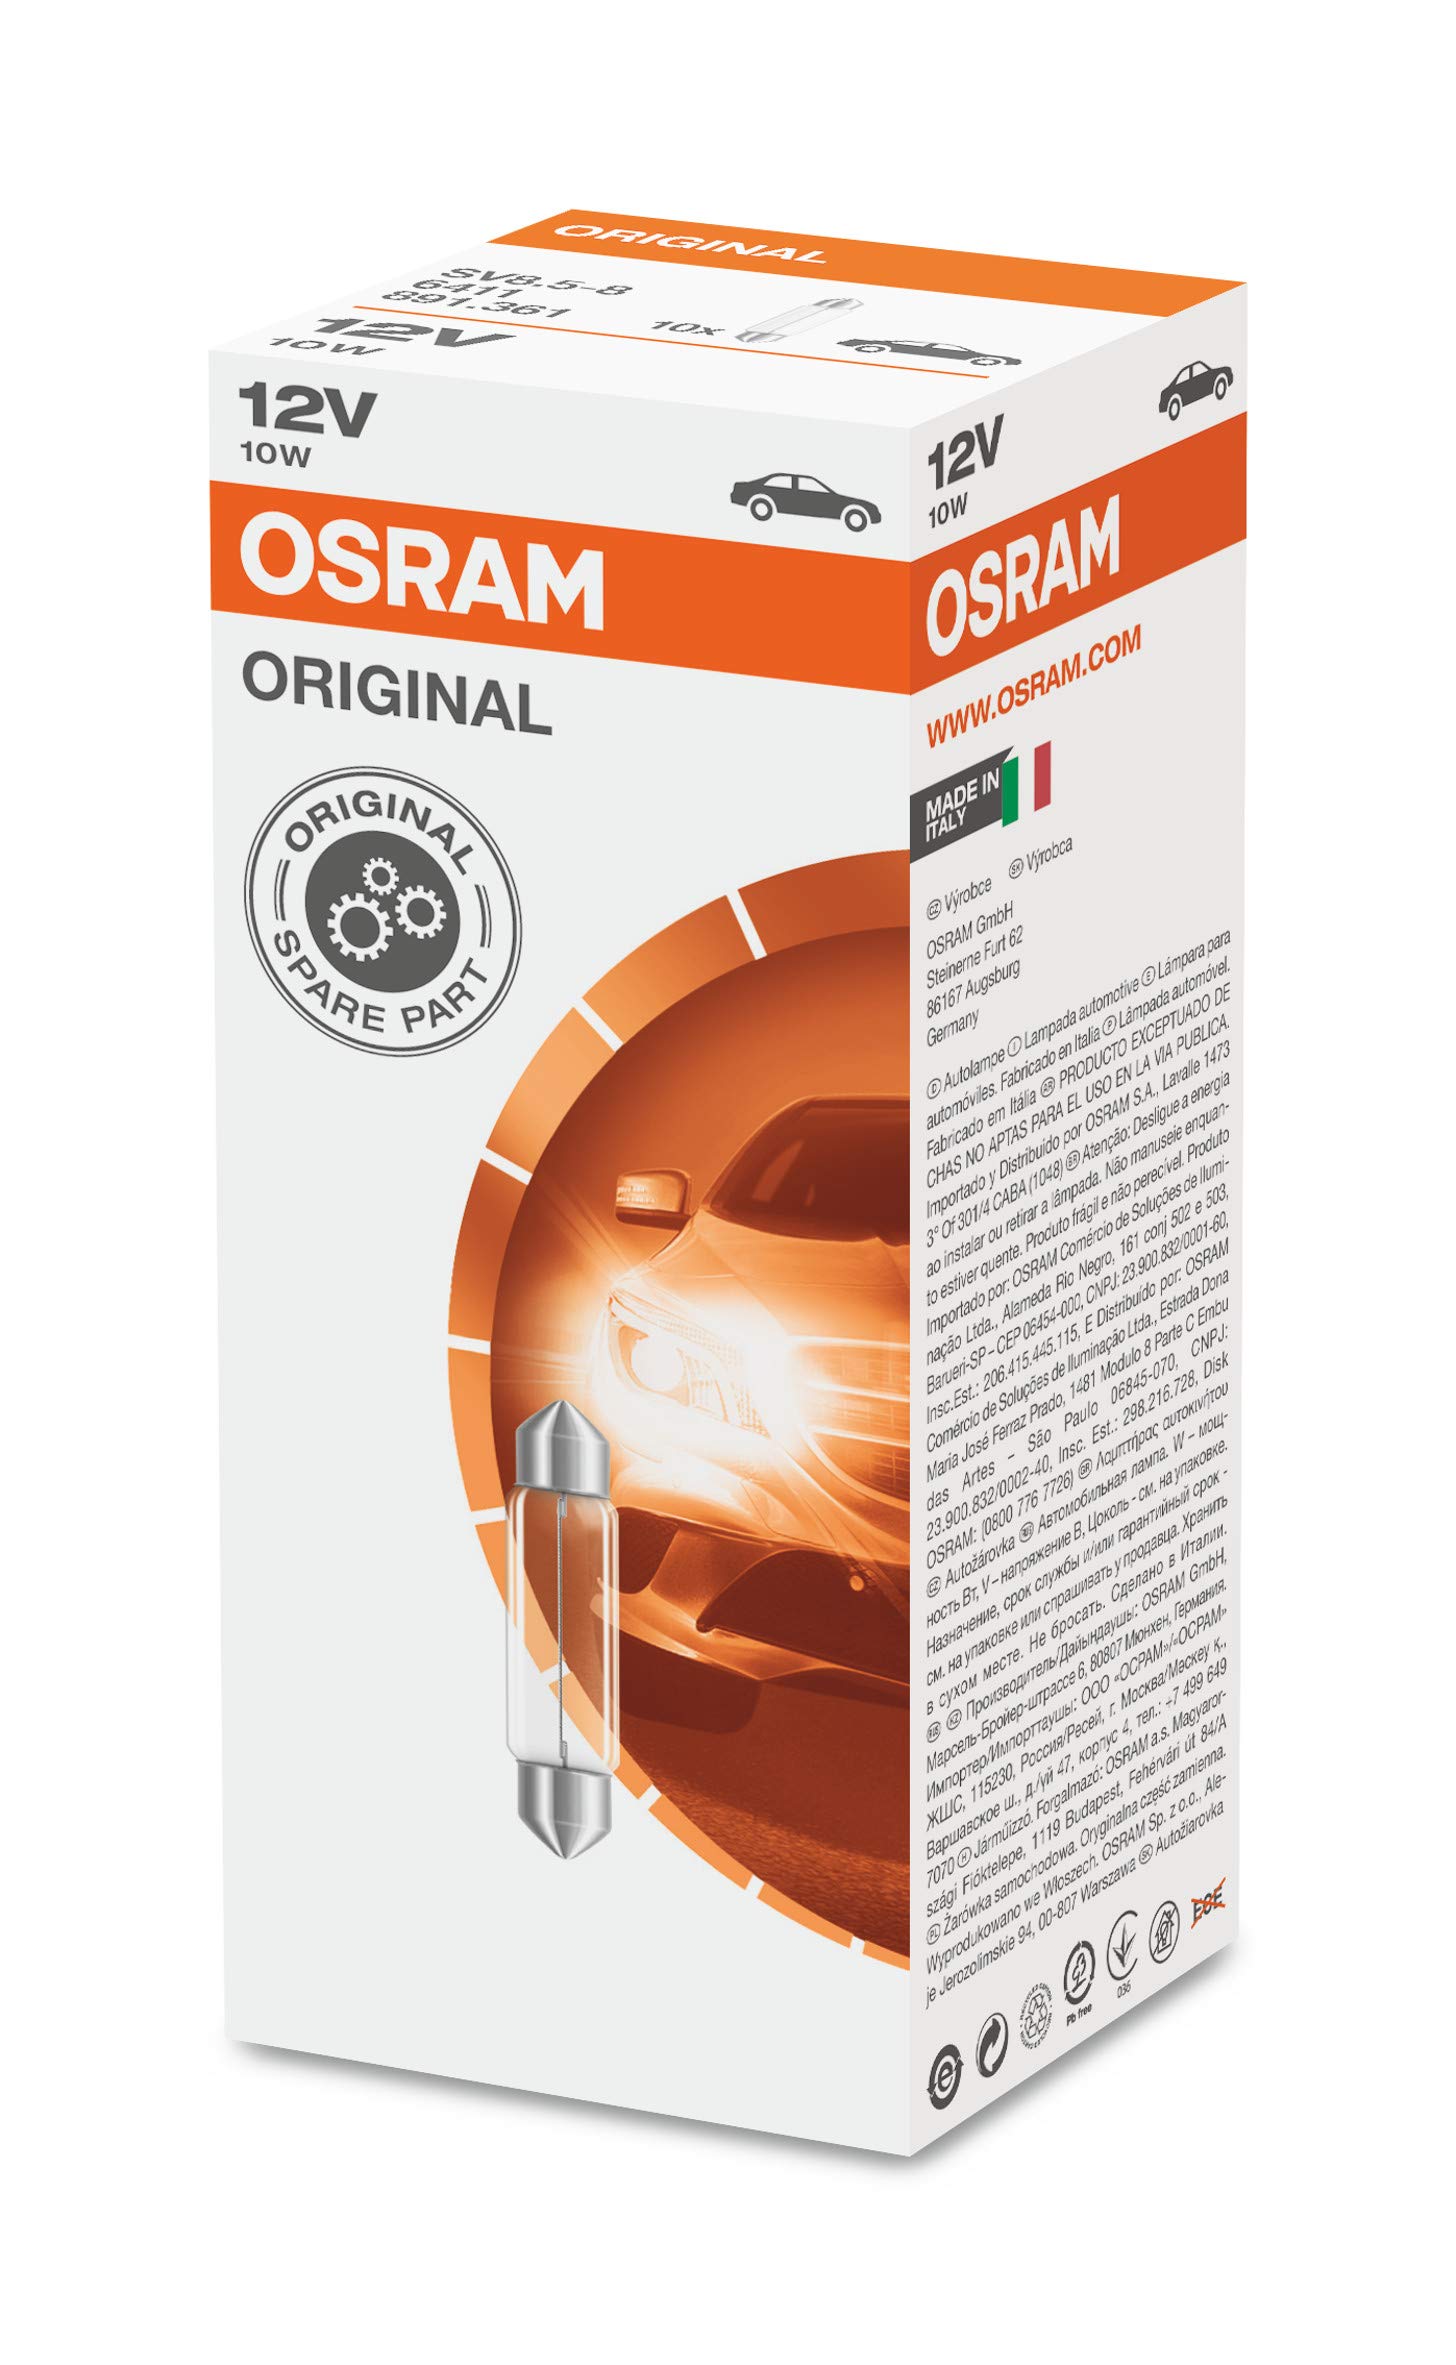 Osram 6411 ORIGINAL Sofittenlampe Sockel SV8.5-8, 12V, 10W, Anzahl 10 von Osram